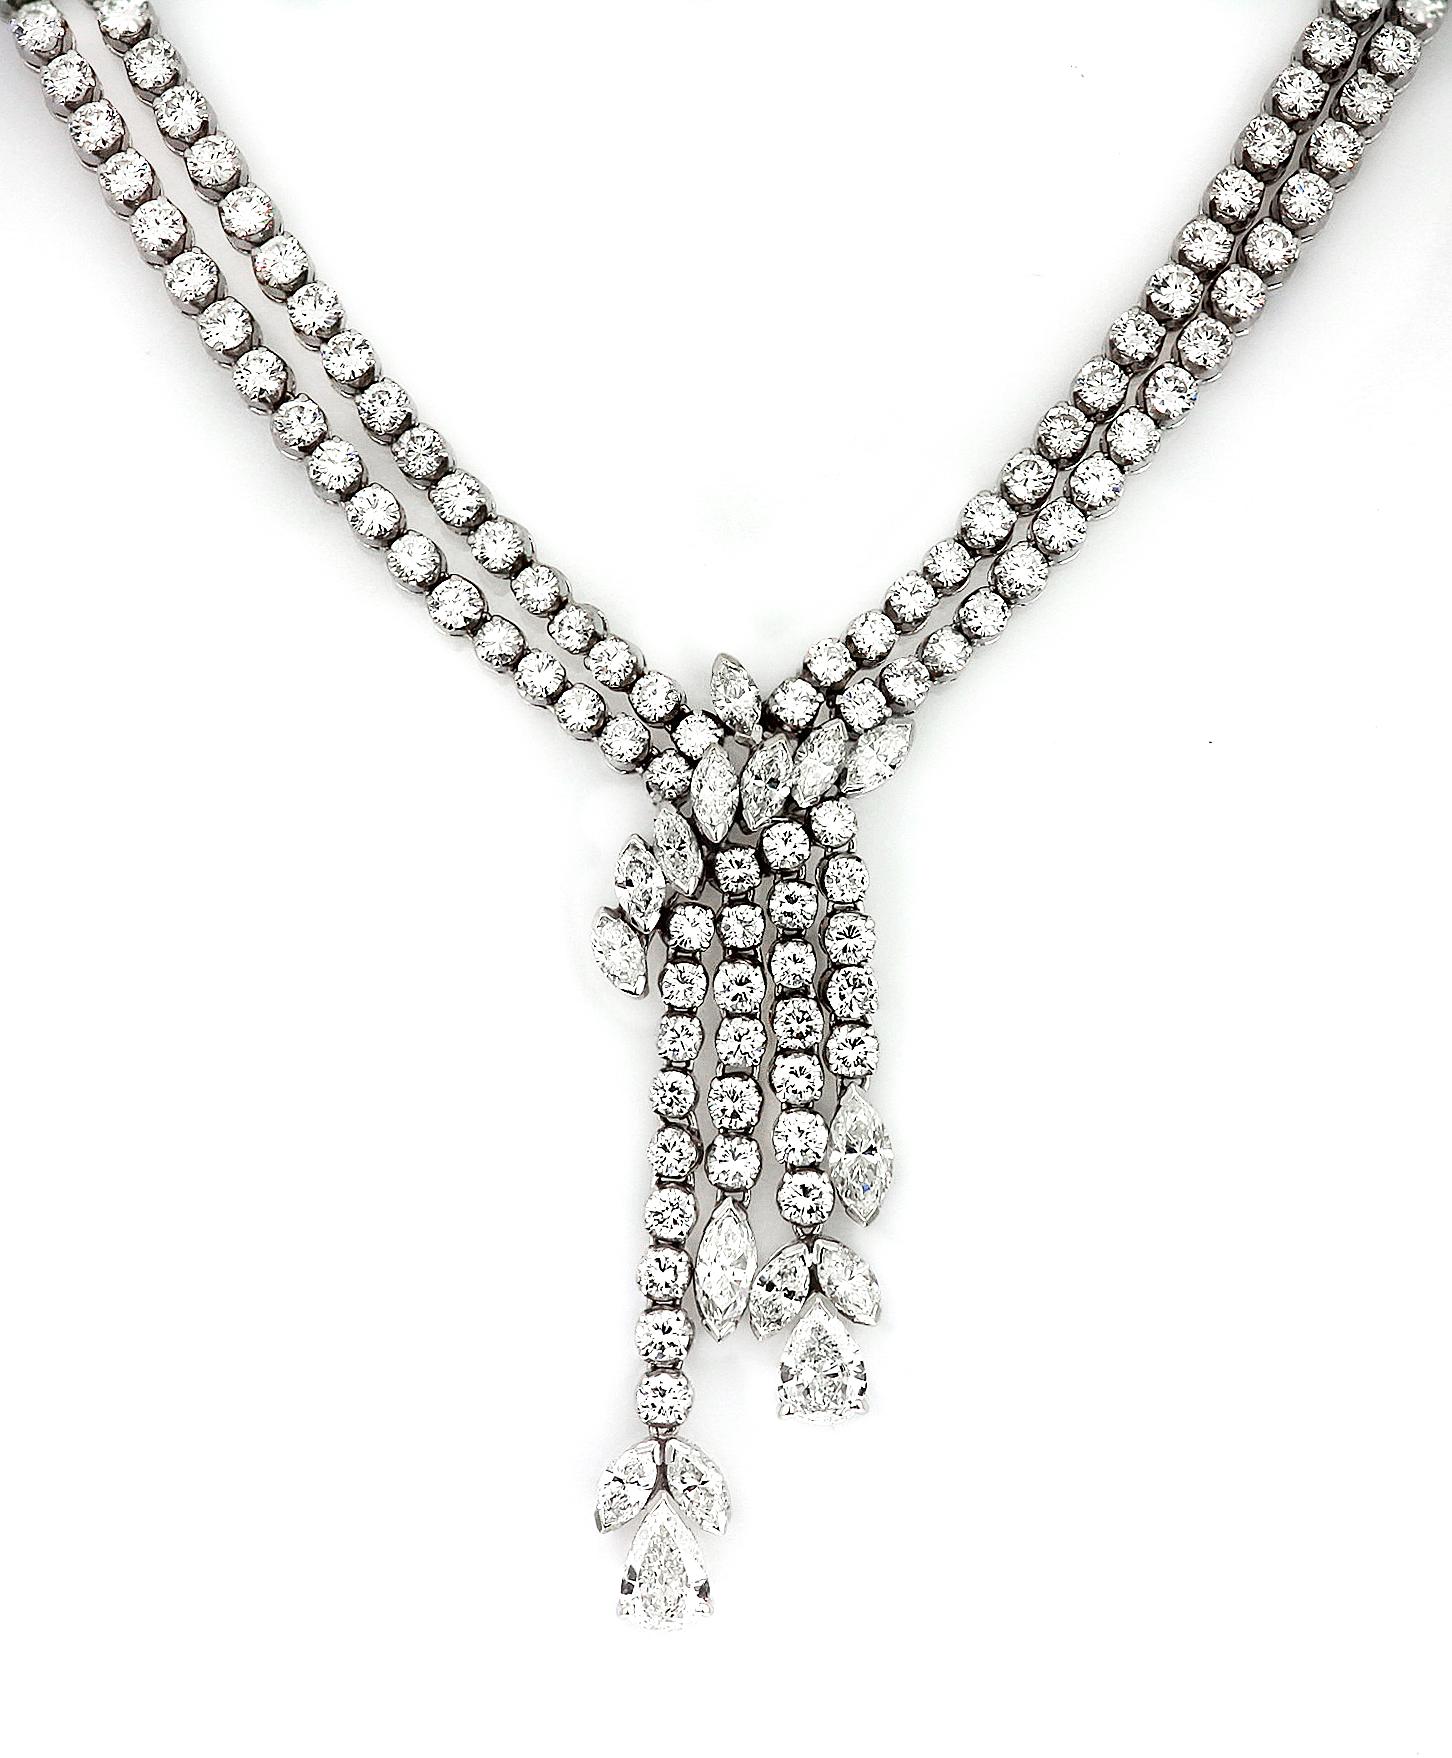 Retro Diamond Drop Necklace/Headpiece, in 18K White Gold